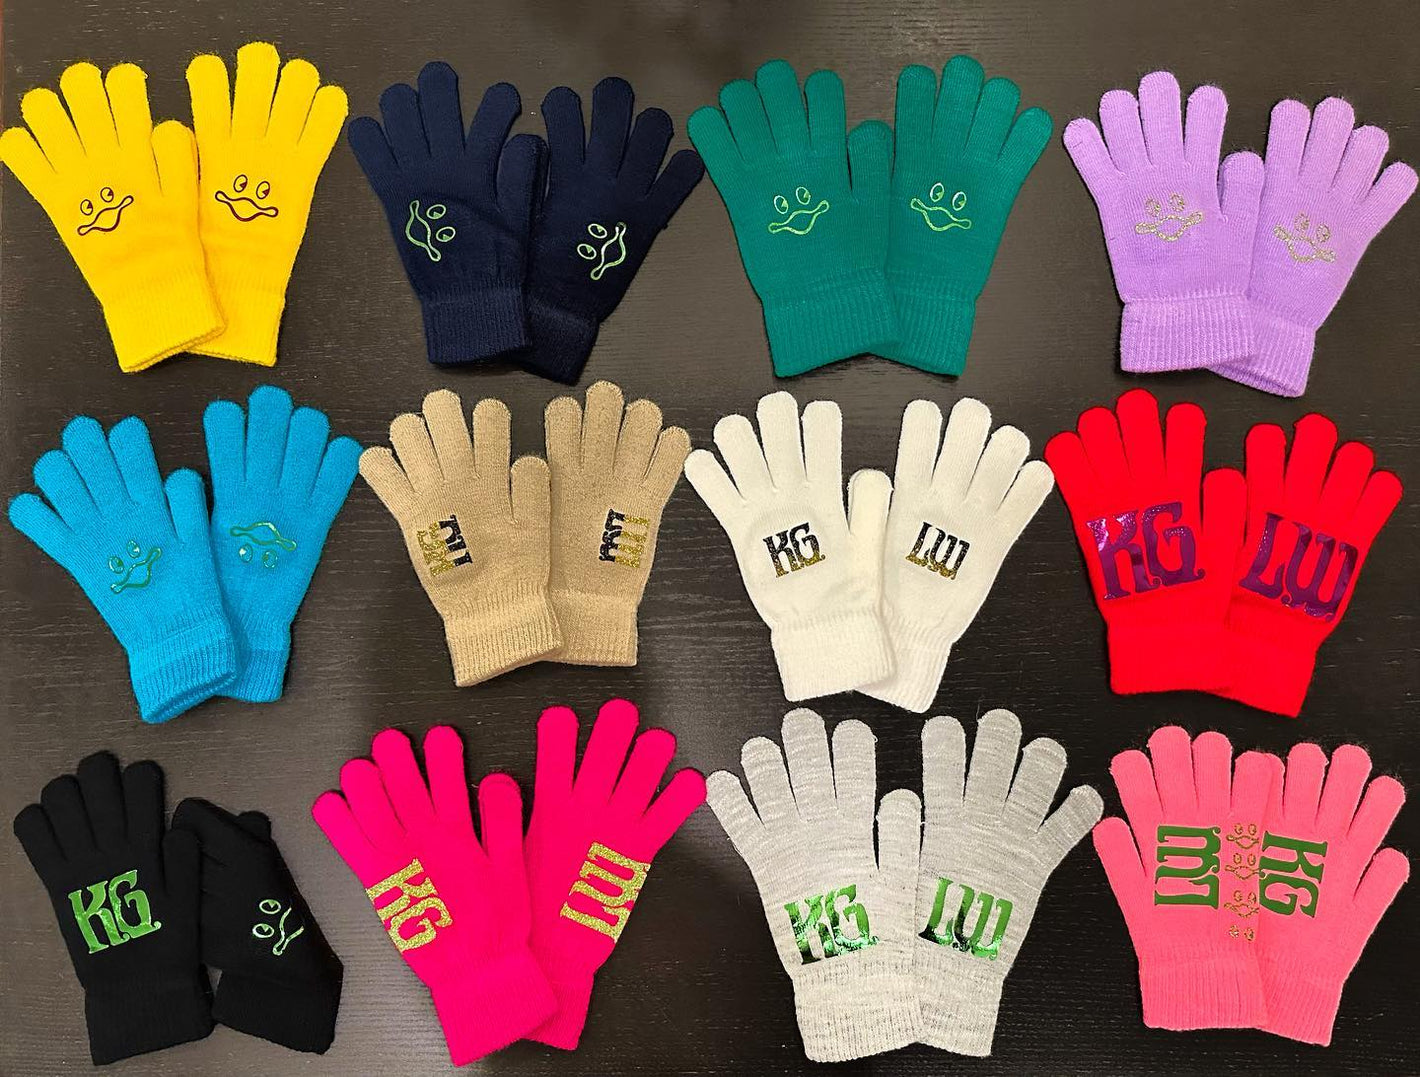 KG/LW & Fishies knit gloves